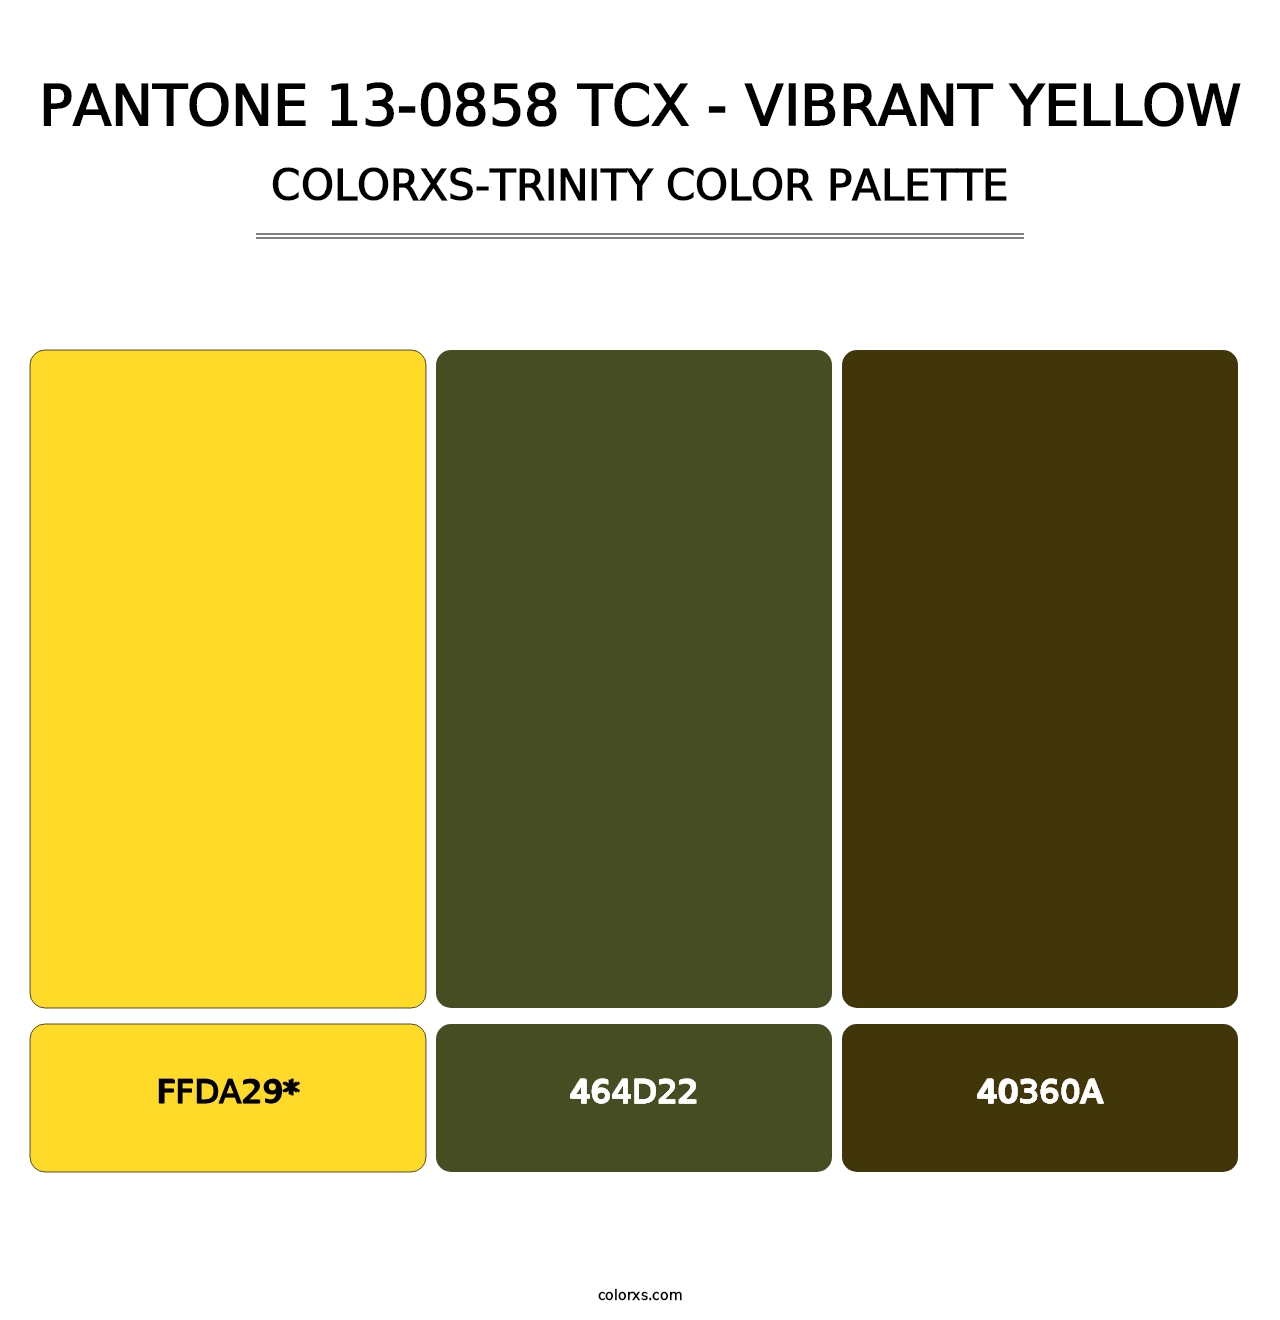 PANTONE 13-0858 TCX - Vibrant Yellow - Colorxs Trinity Palette